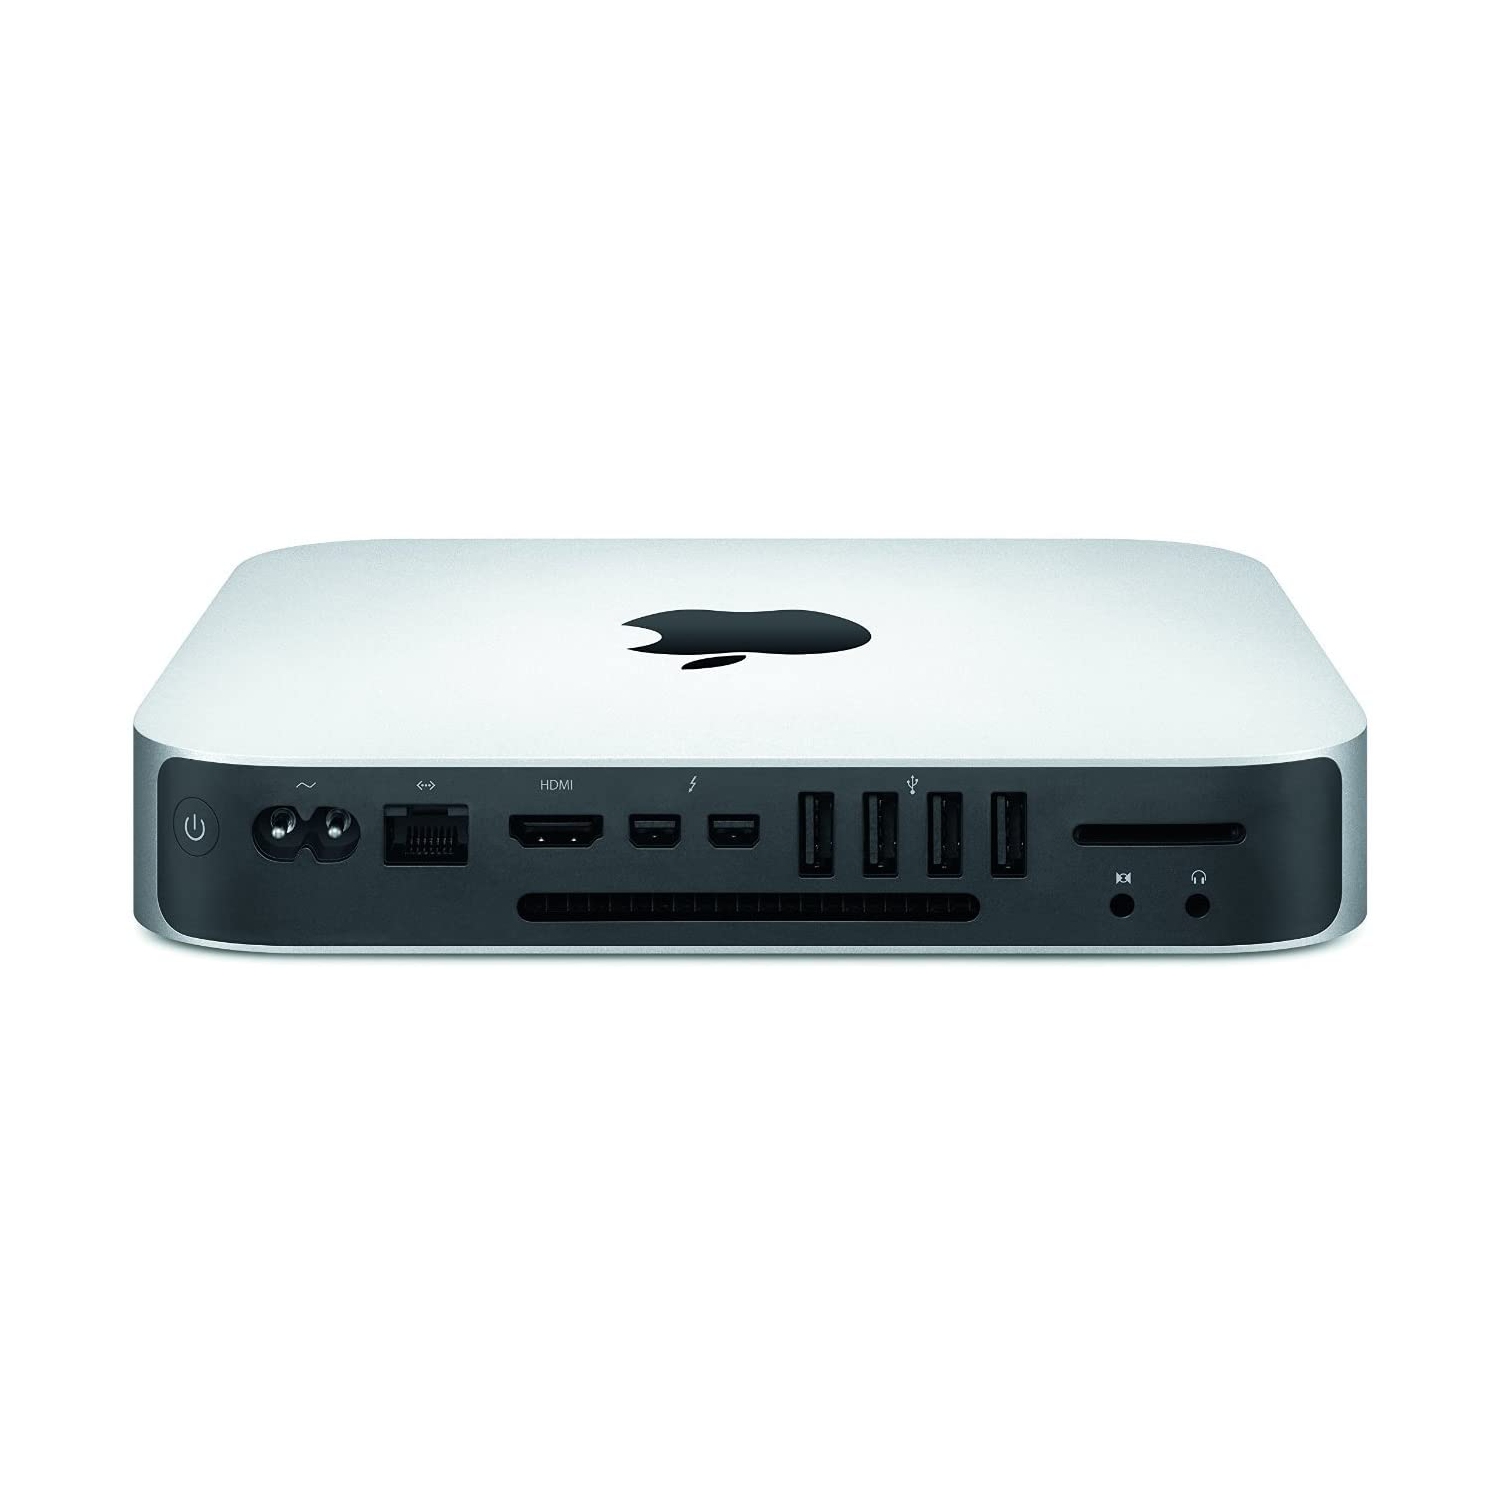 Refurbished (Excellent) - Apple Mac Mini (Intel Core i5 / 8GB RAM